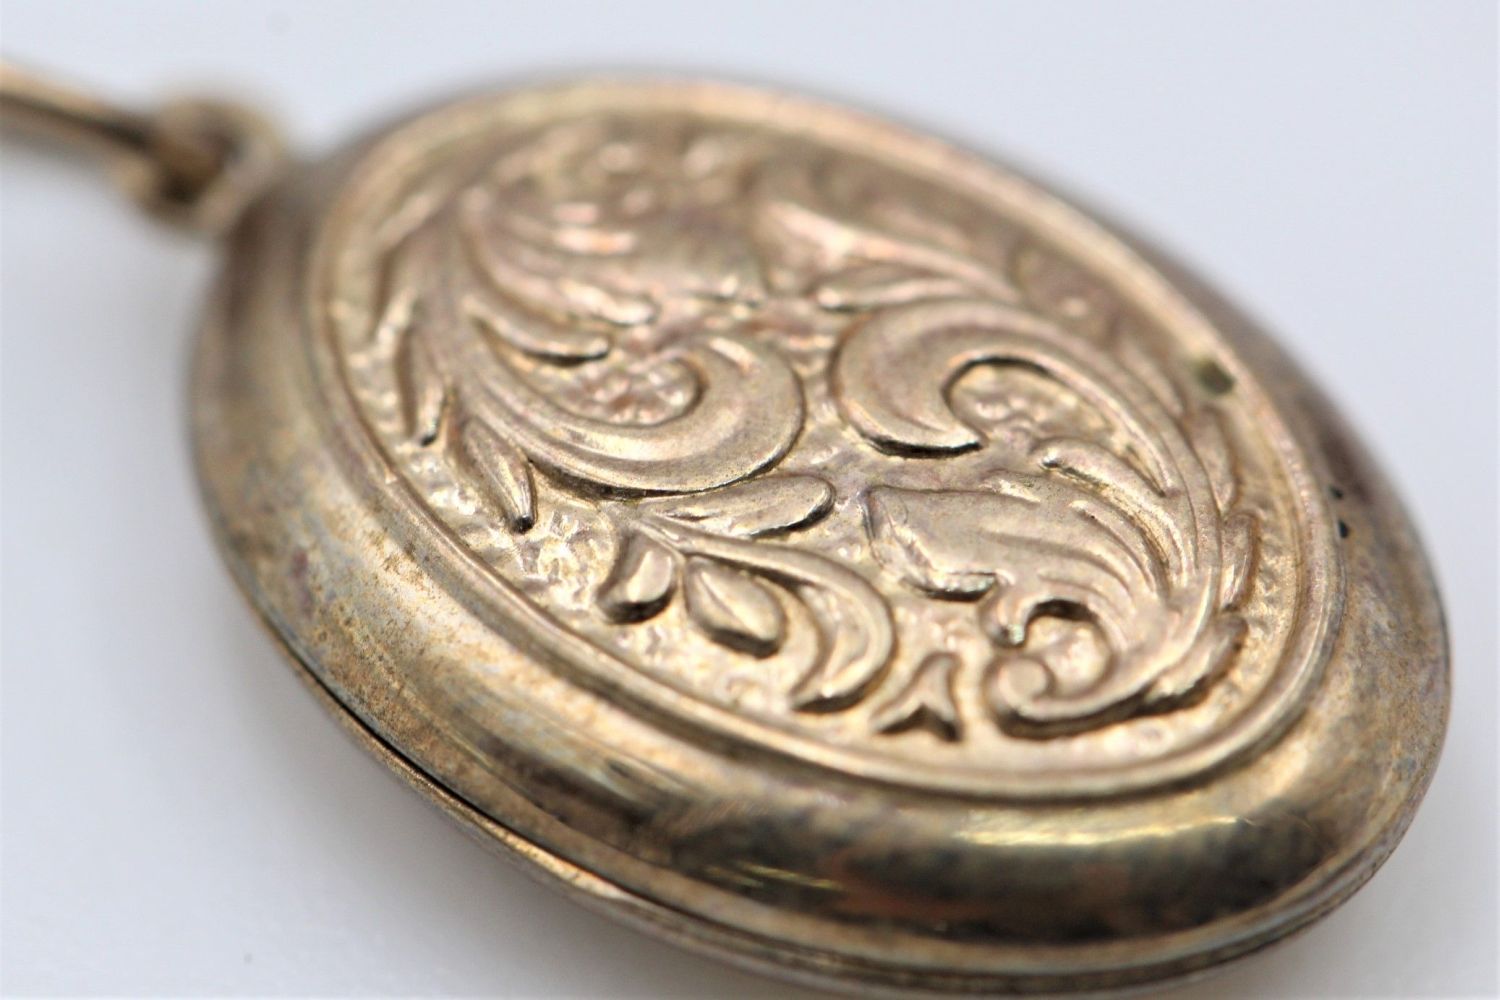 2 x 9ct gold patterned locket pendants 2.7 grams gross - Image 3 of 5